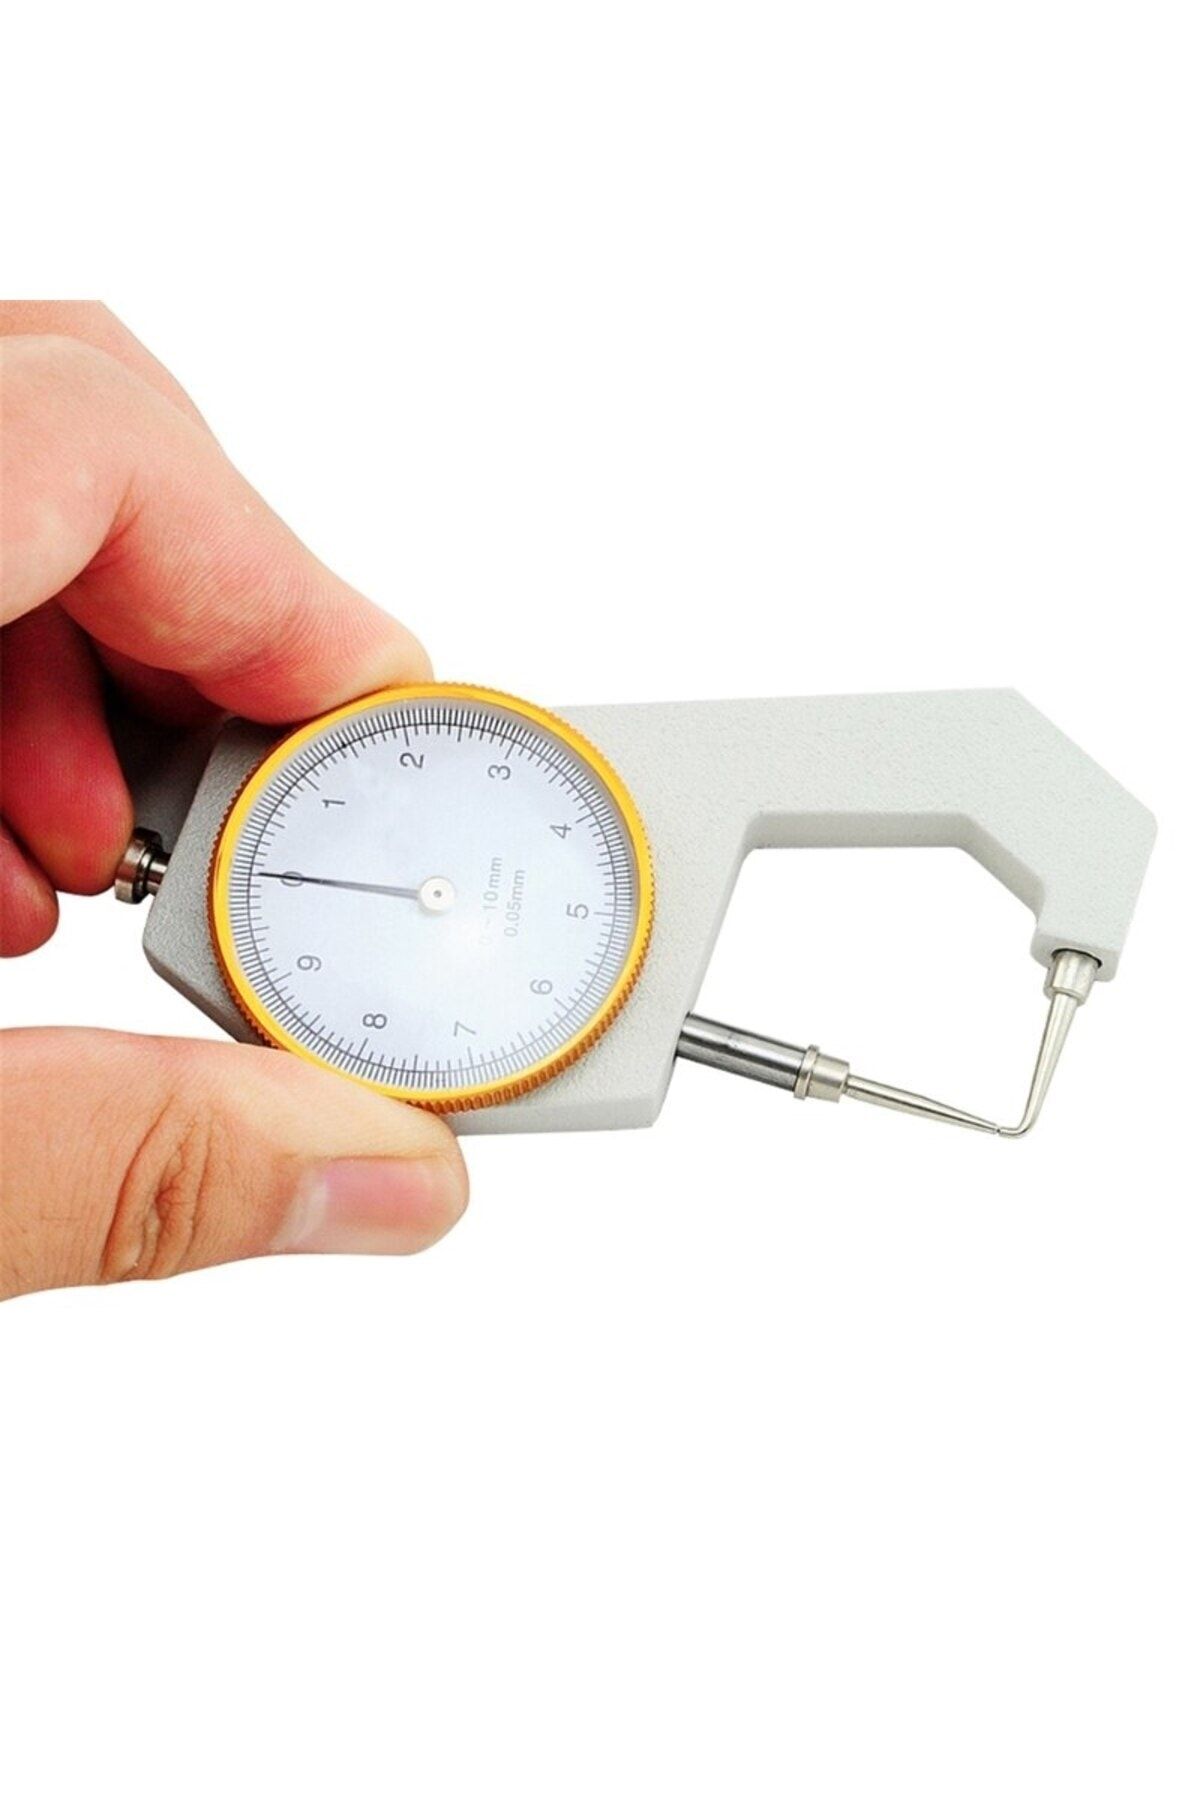 Depolife Mekanik Mikrometre Kalınlık Ölçer Hassas ölçüm kumpas 0-20mm 0.01mm ölçme